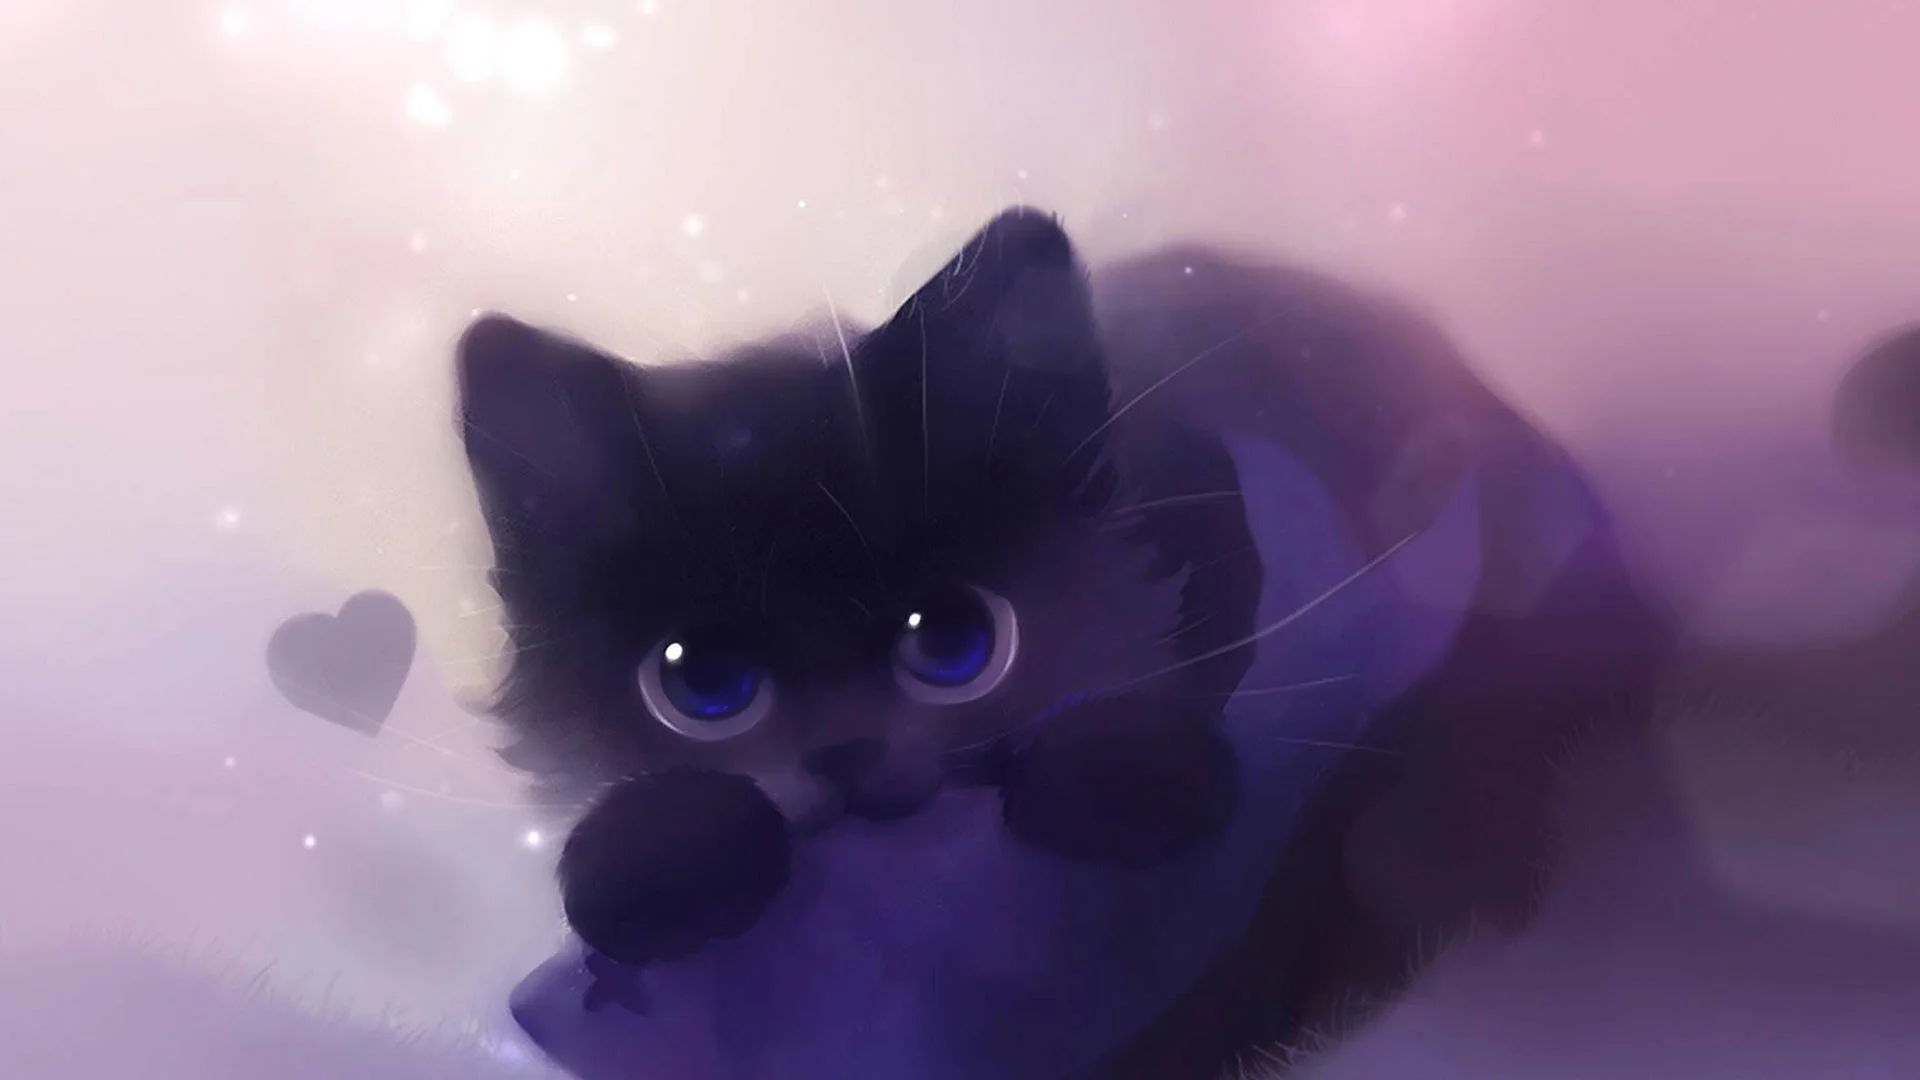 Hd pics photos cute black cat 2d animated hd quality desktop background wallpaper